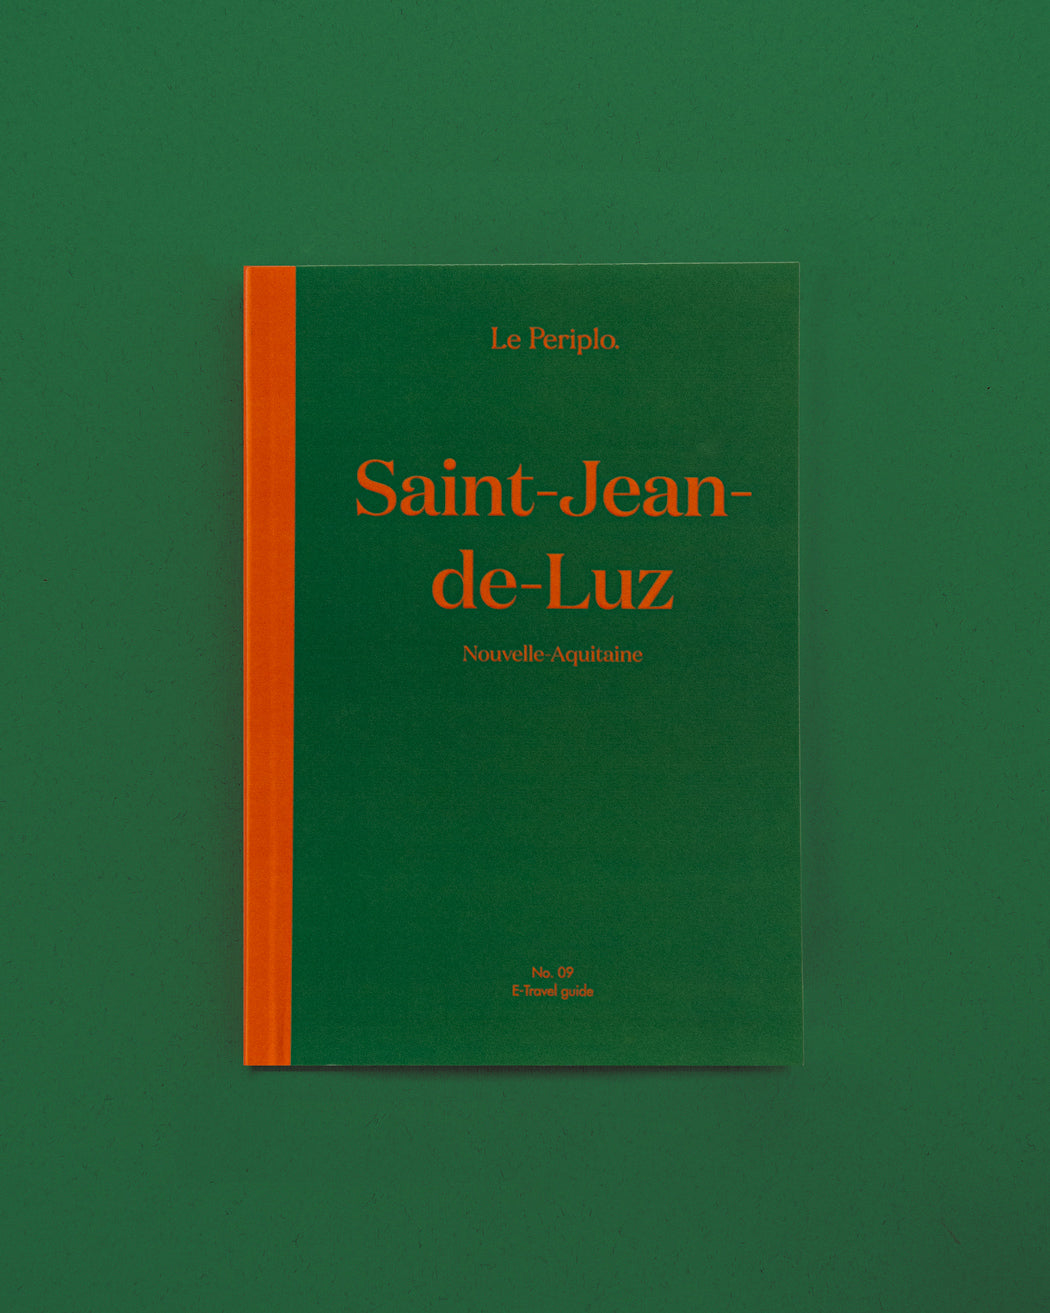 Saint-Jean-de-Luz (printed) Spanish version